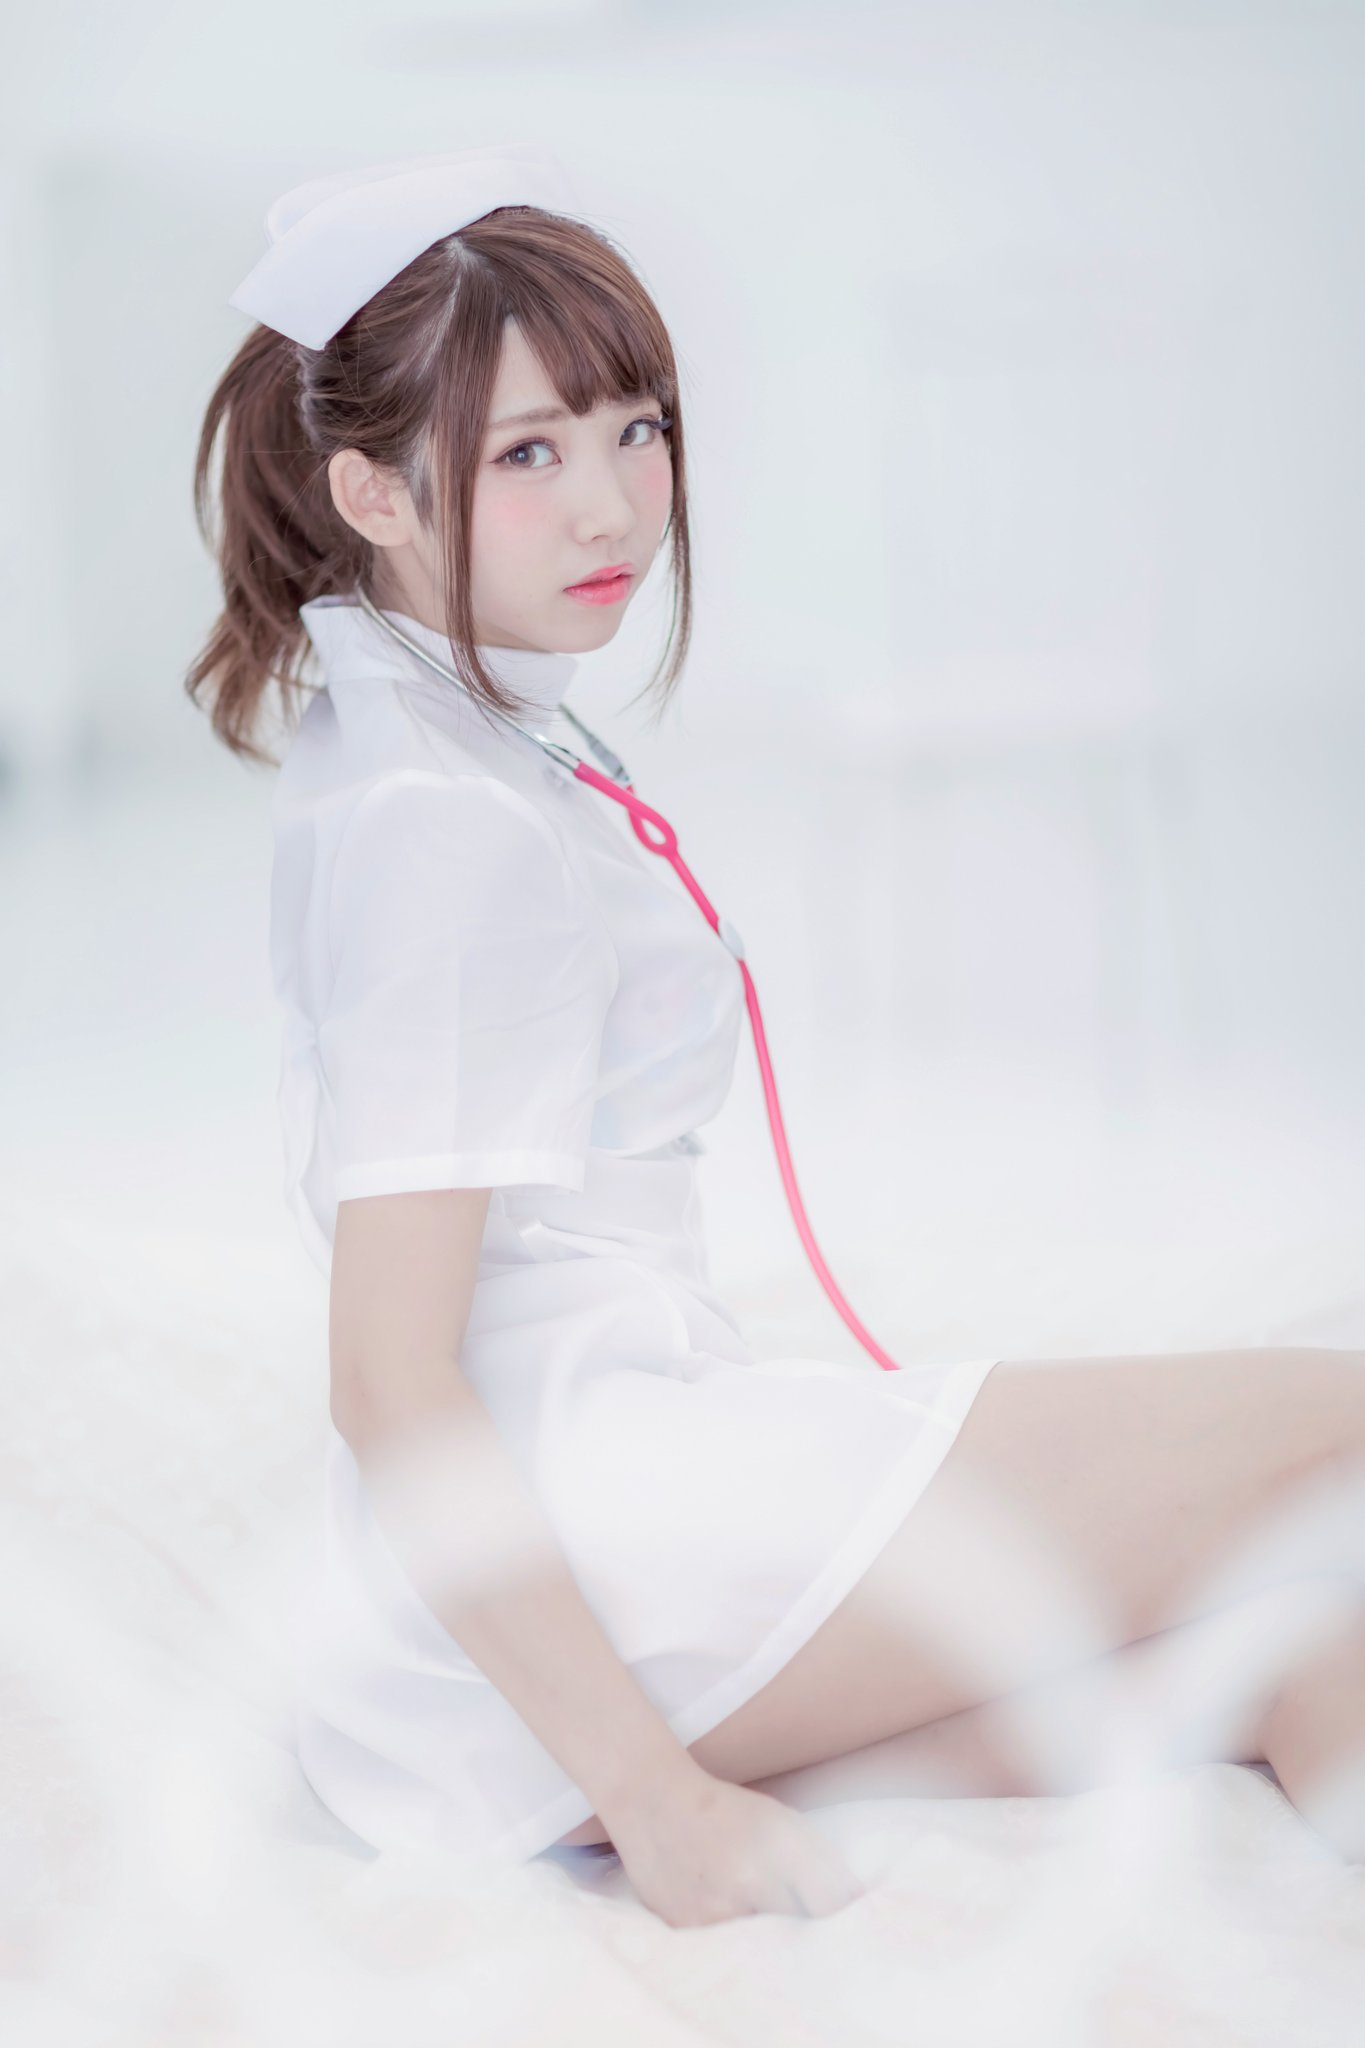 Enako Japanese Women Asian Nurse Outfit Women 1365x2048